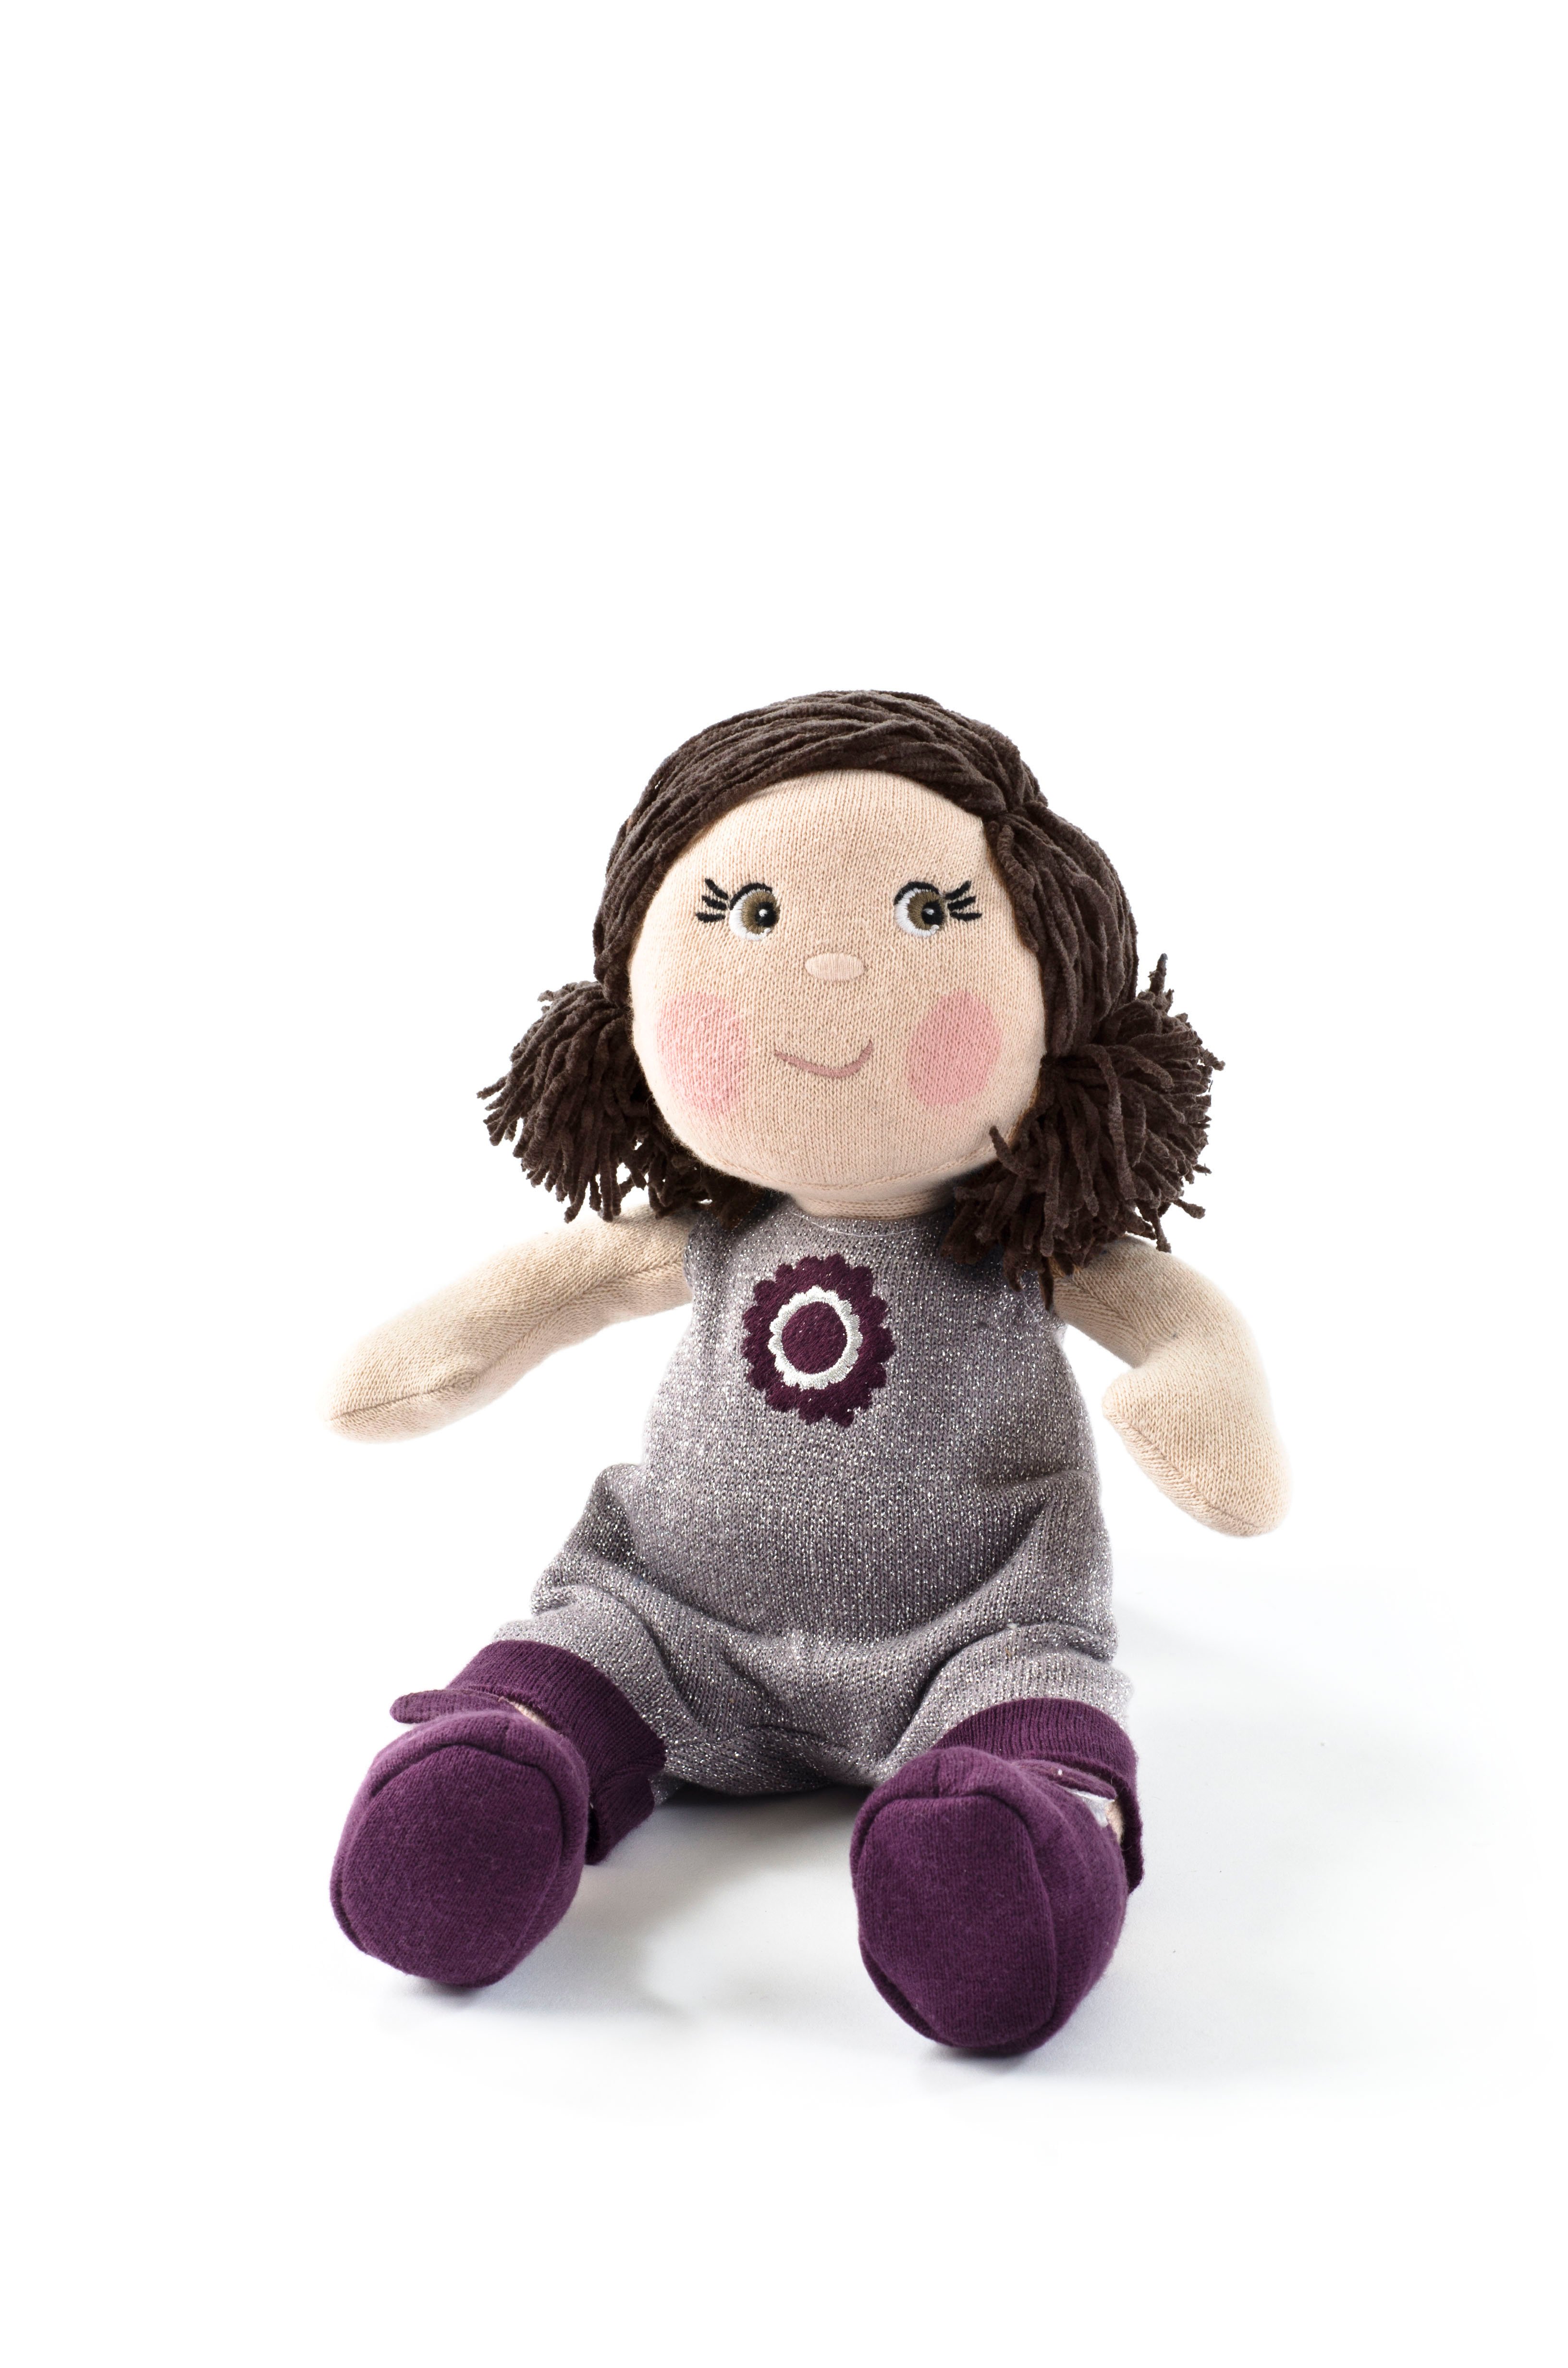 Smallstuff - Knitted Doll 30 cm - Luna - Leker